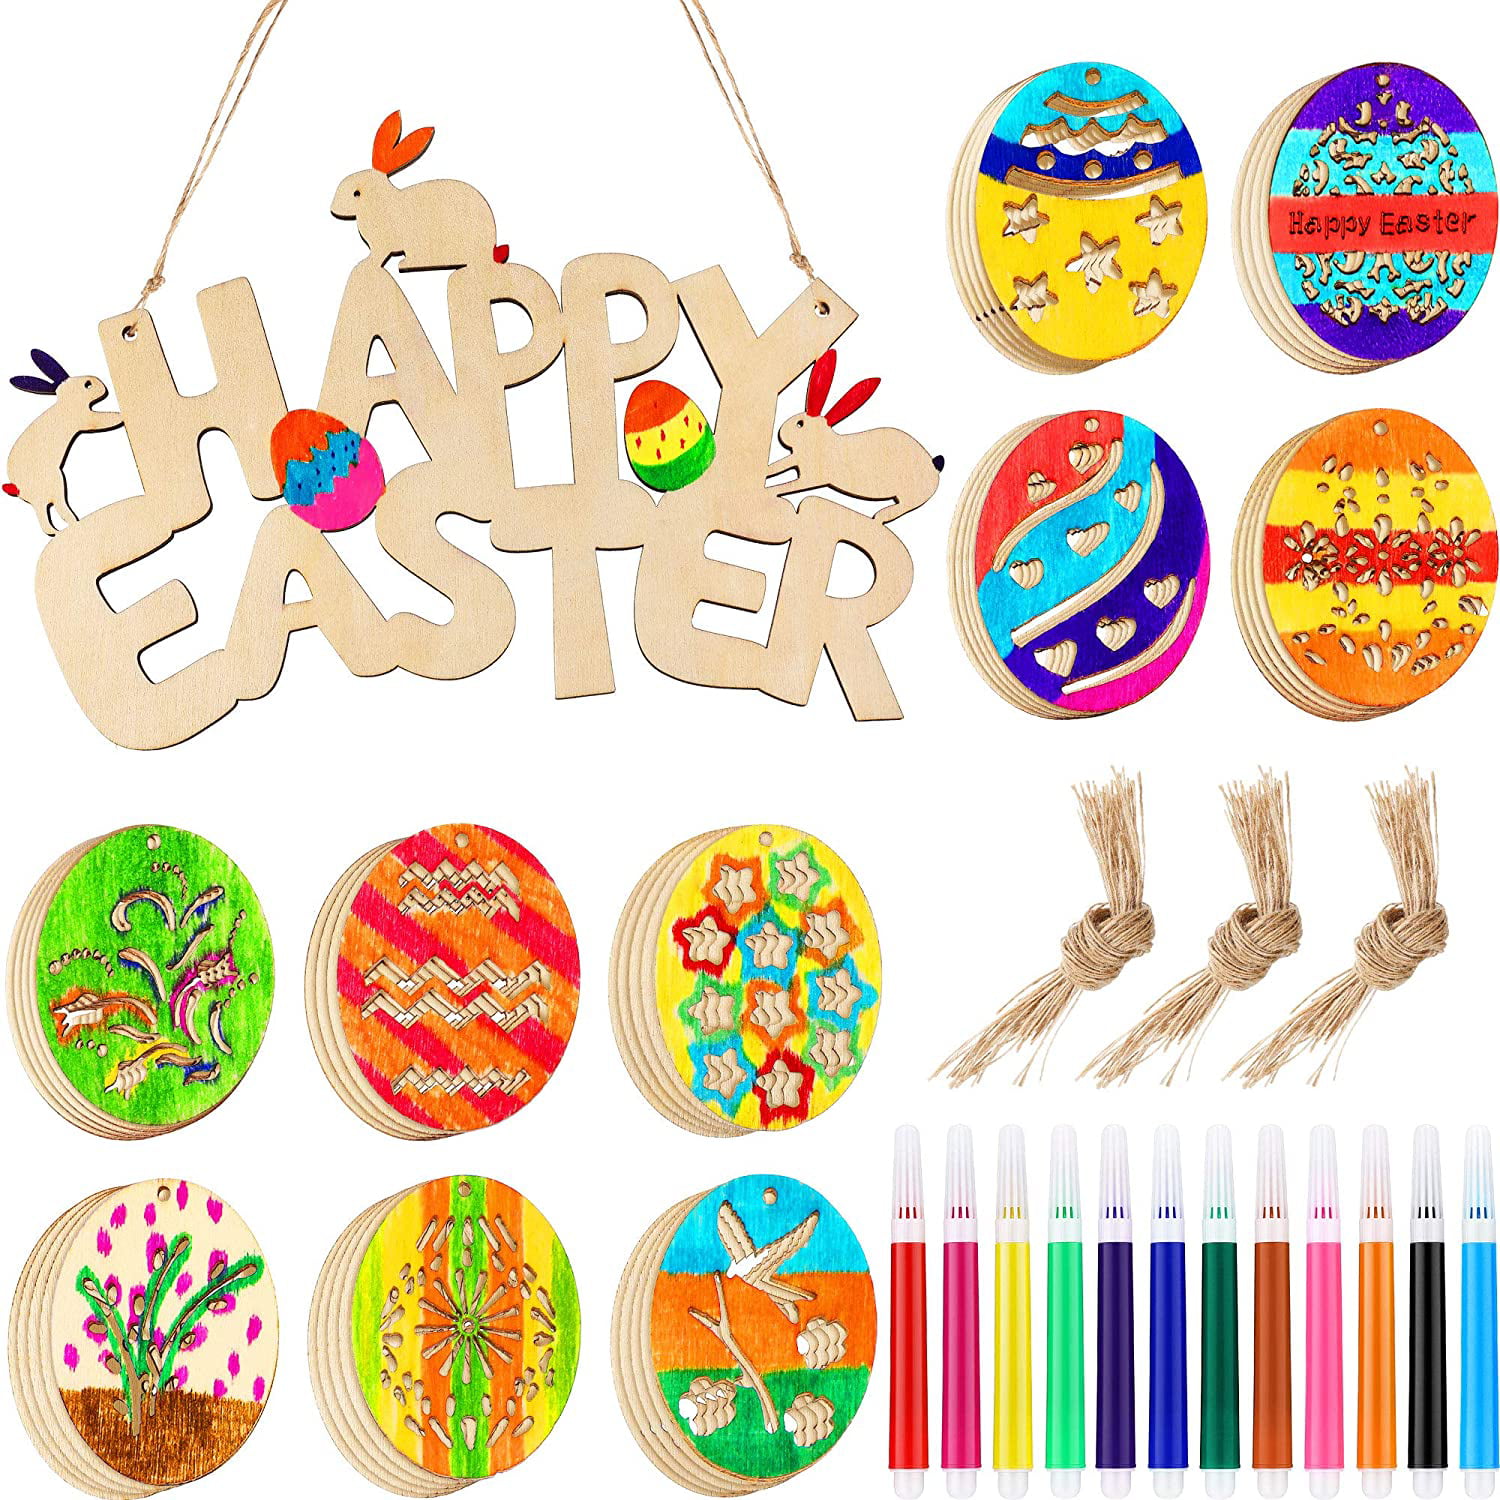 A 50 Pcs Unfinished Laser Wooden Slices Easter Eggs Hanging Ornaments,Suitable for Easter Egg Basket Stuffers Fillers DIY Crafts,Home Decorations or Gifts 